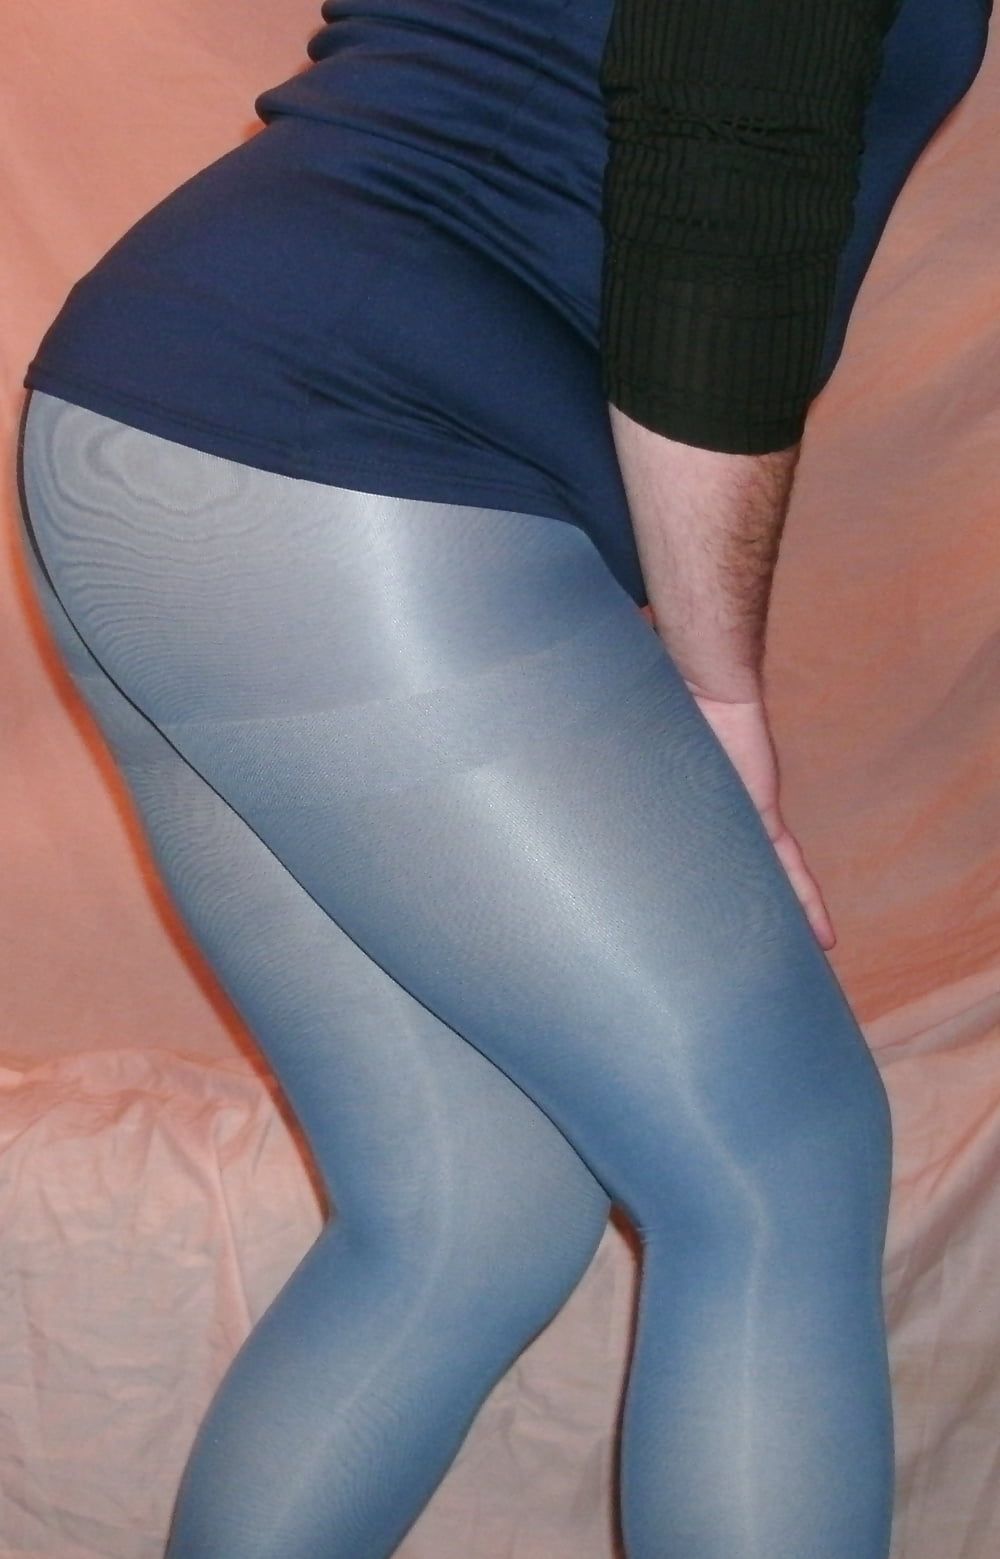 Sissy Boy Lovelaska - My sexy ass and new leggings